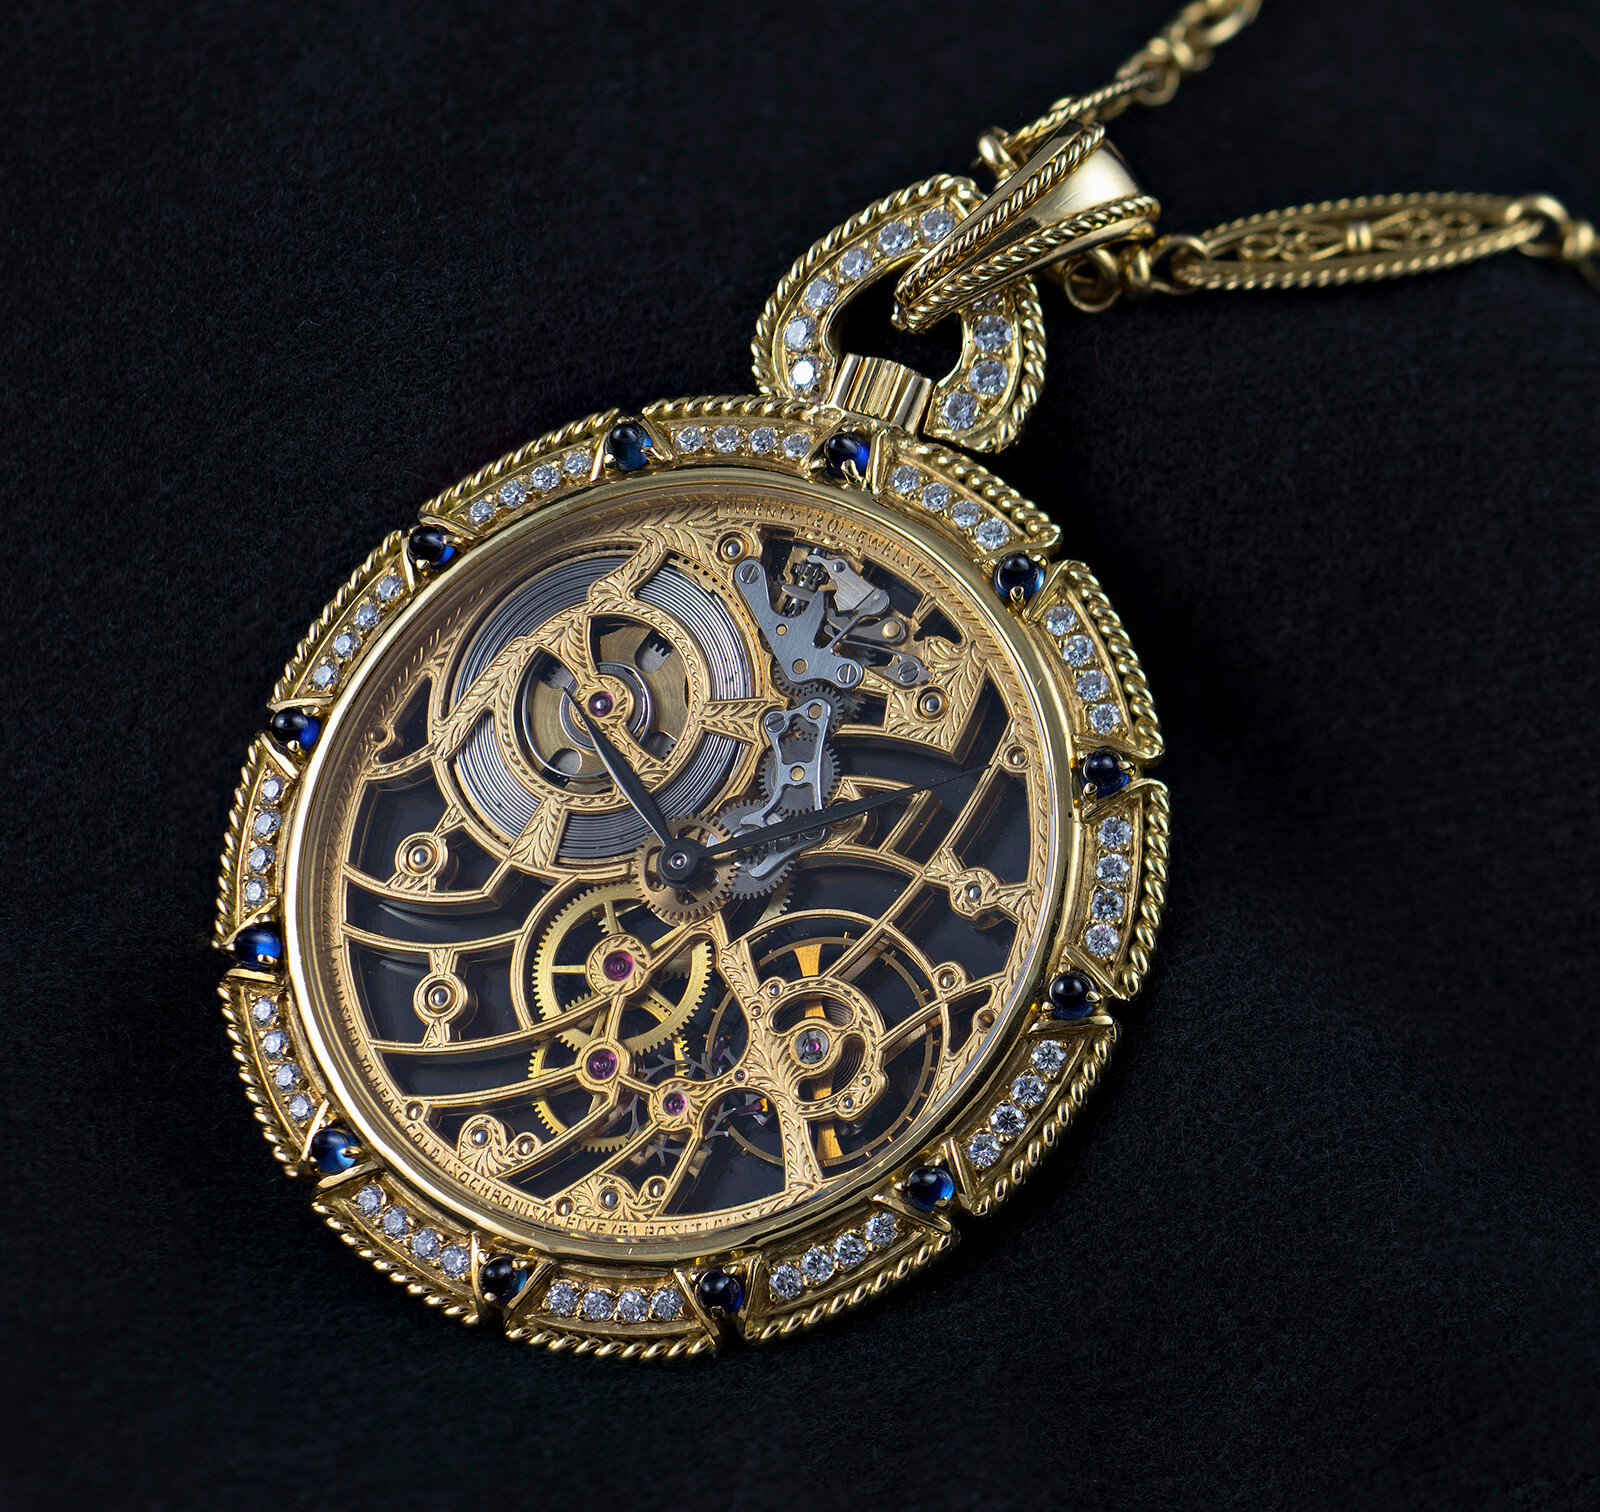 Skeletonized Audemars Piguet pocket watch converted for pendant use